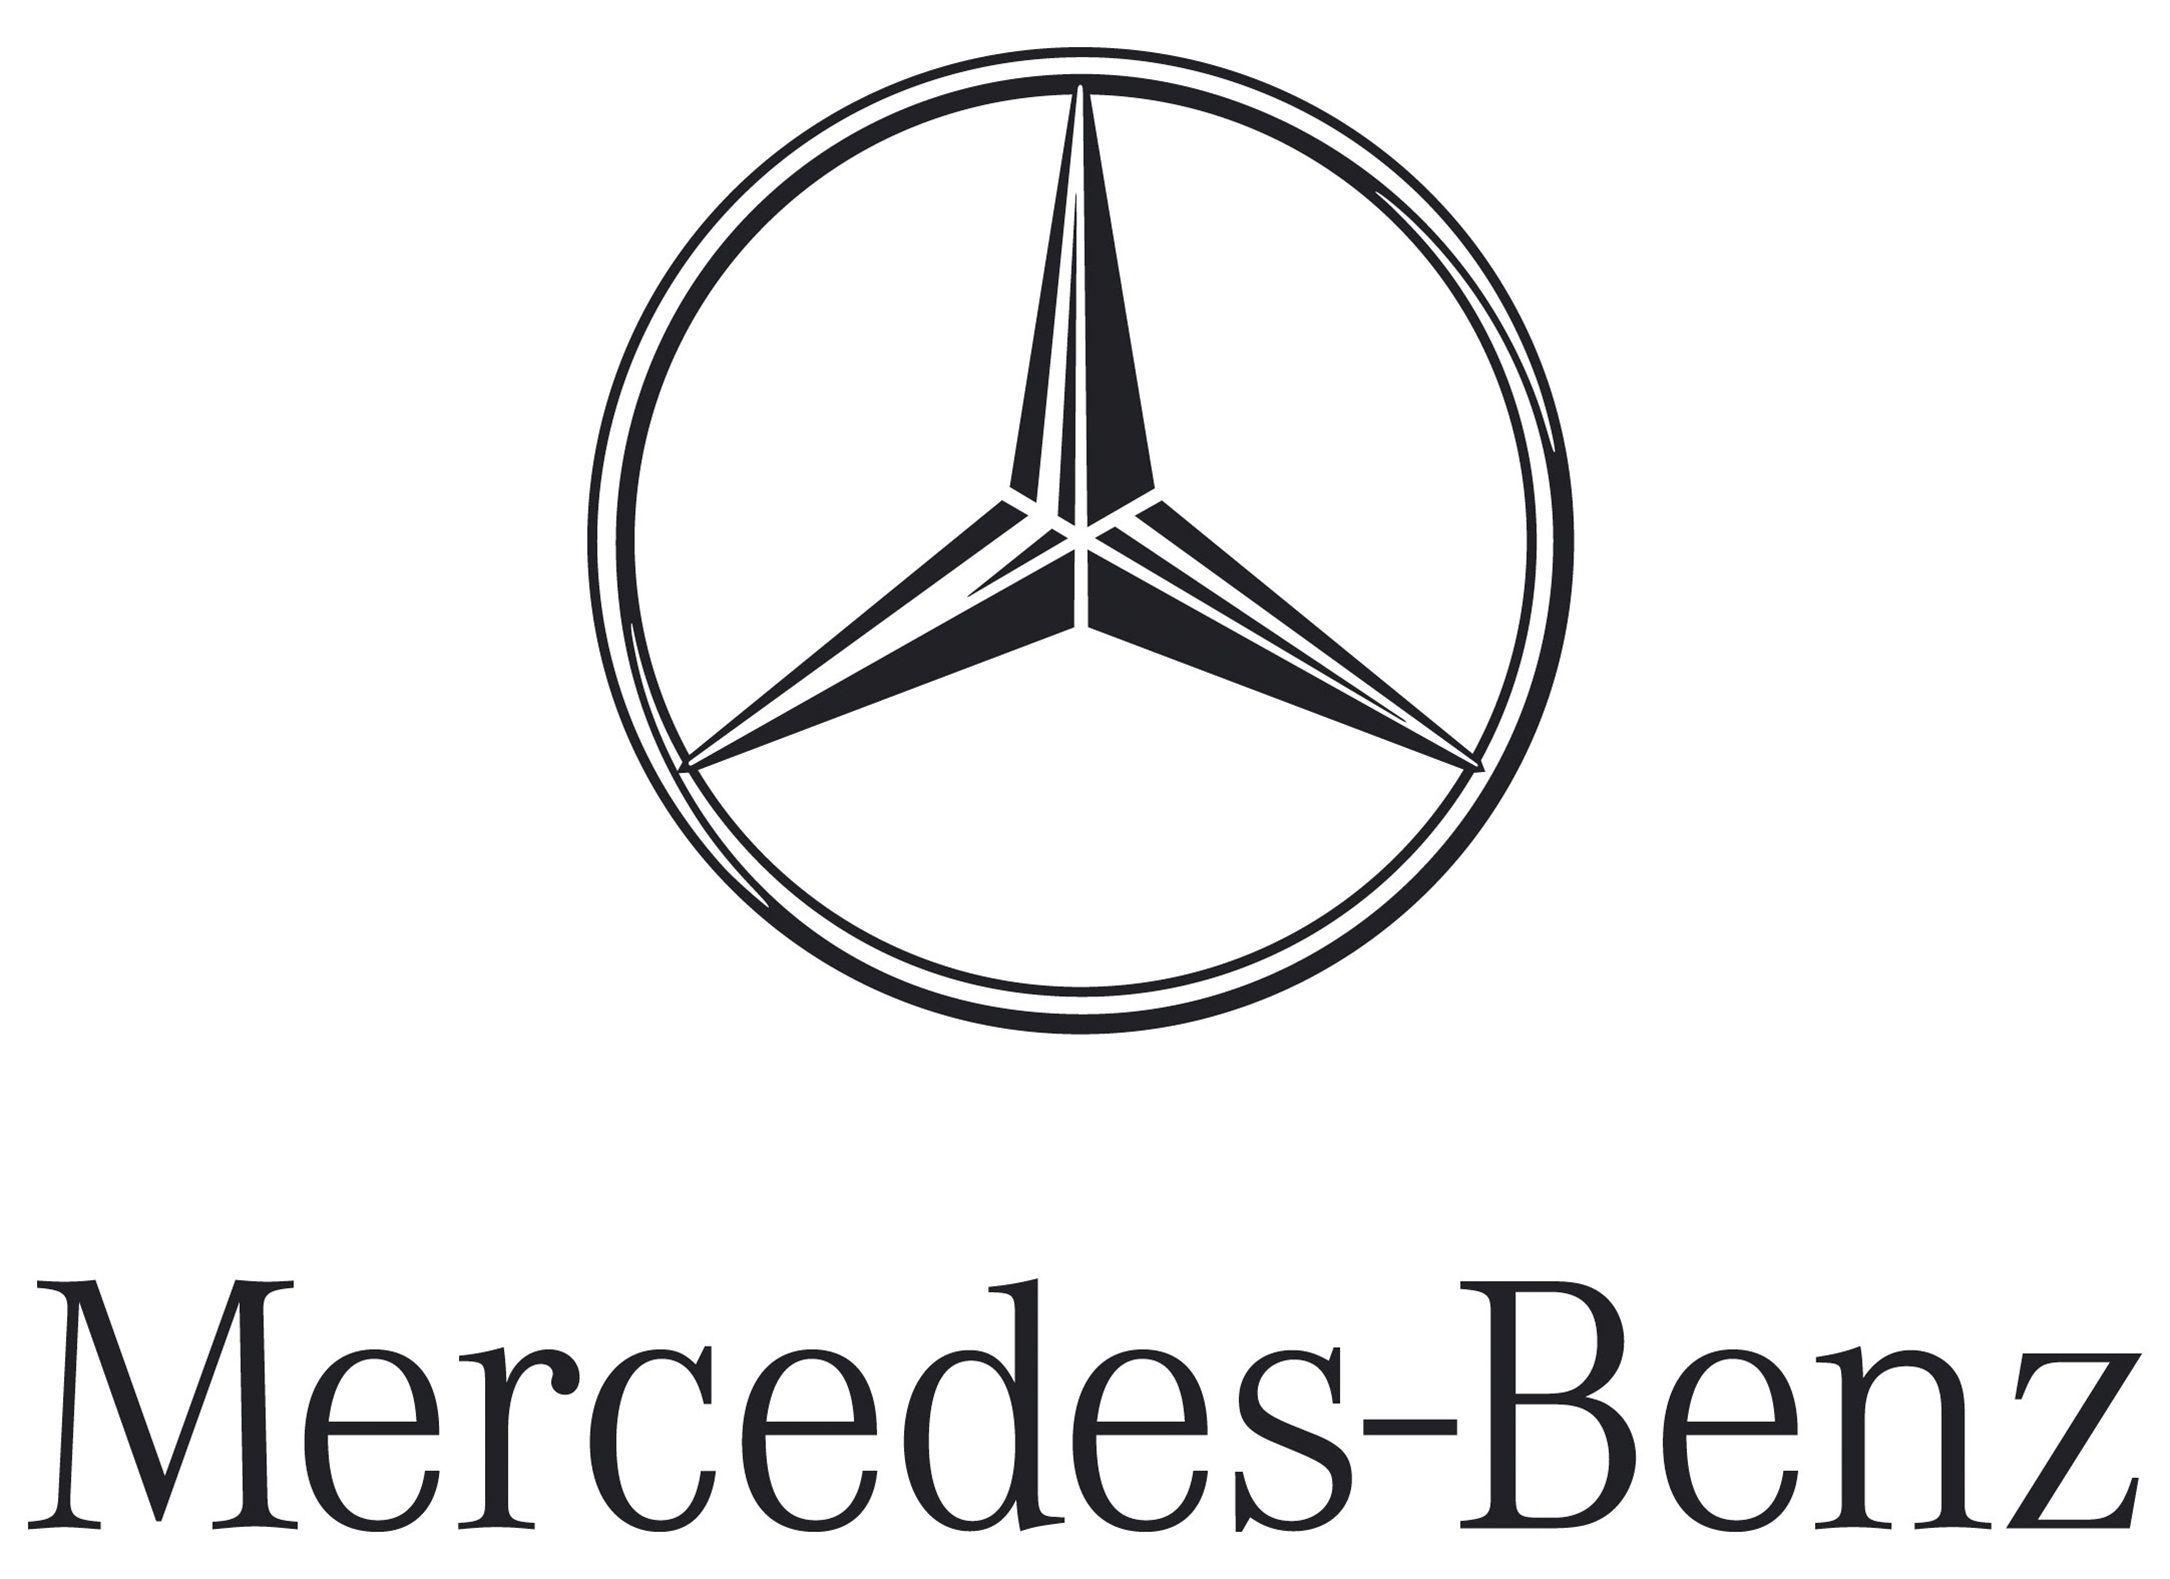 Benz Trucks Logo - Mercedes Benz Logo | Logos & trademarks | Pinterest | Mercedes benz ...